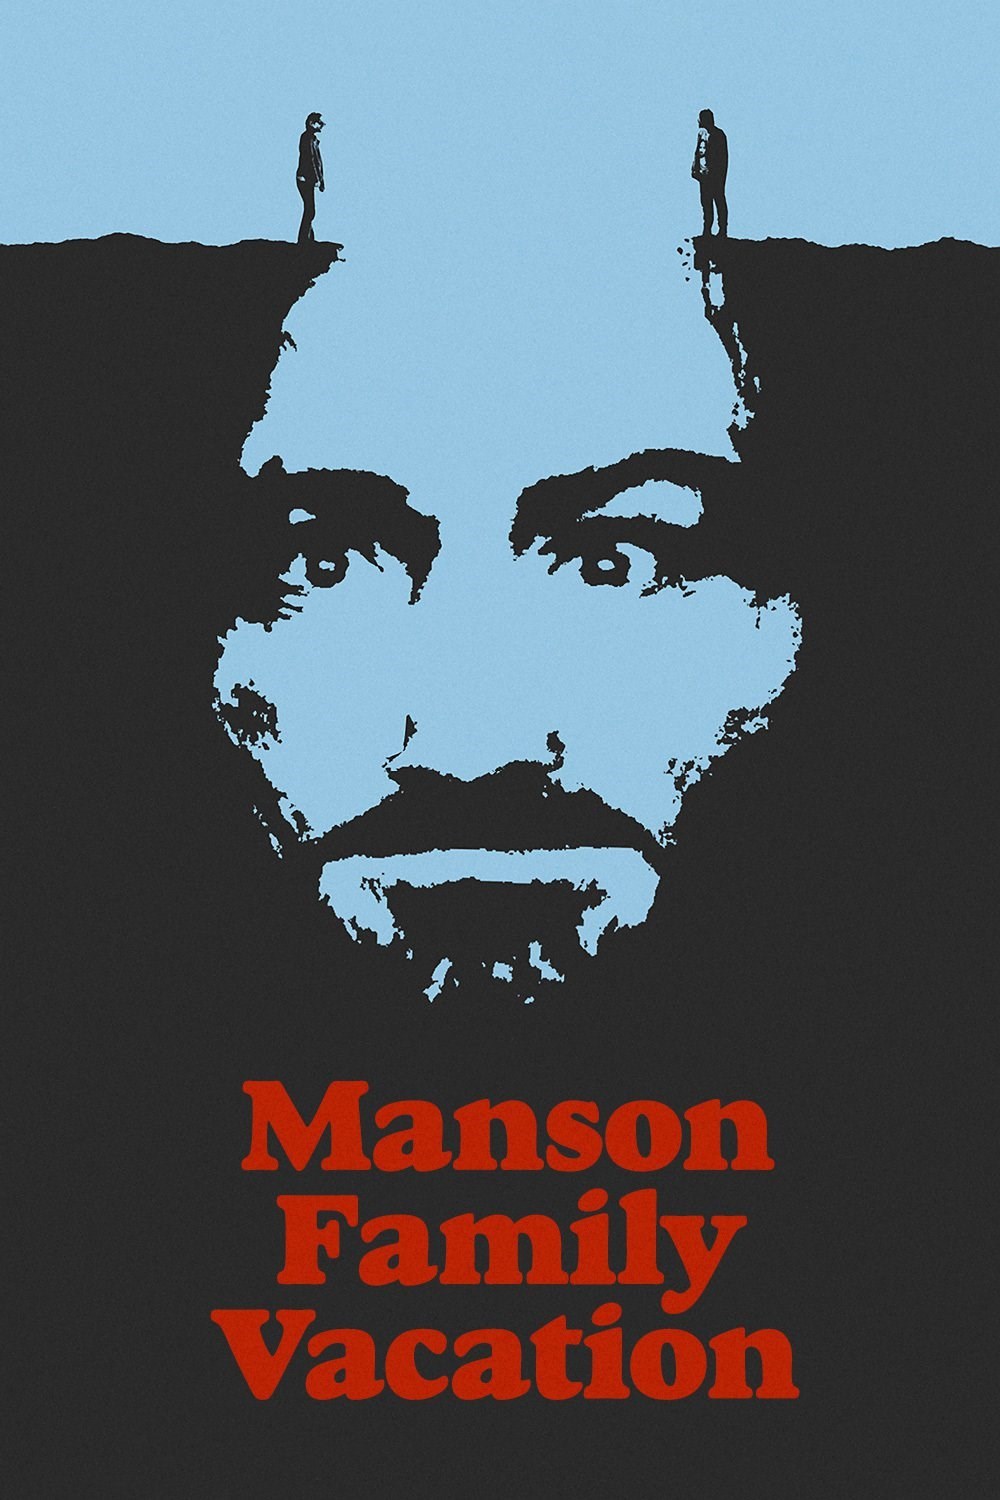 Manson Family Vacation 2015 - Full (HD)